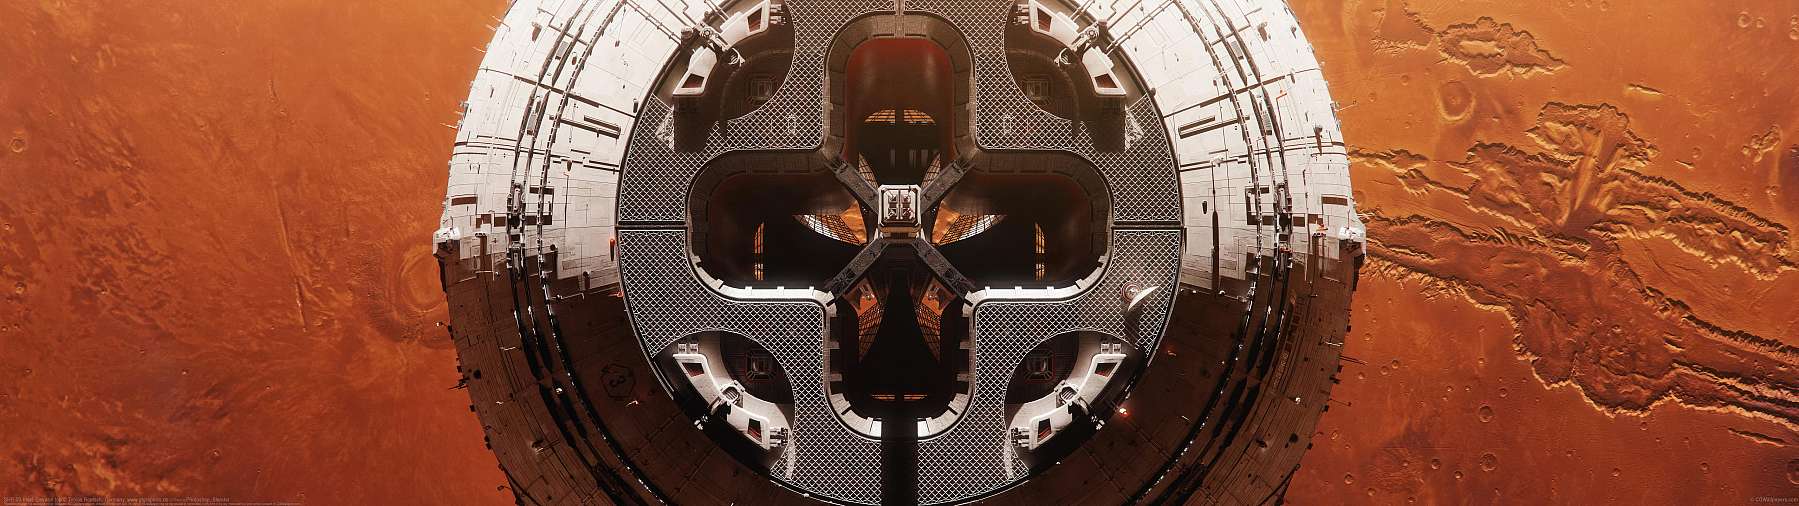 SHR-00-Mars Elevator top ultrawide wallpaper